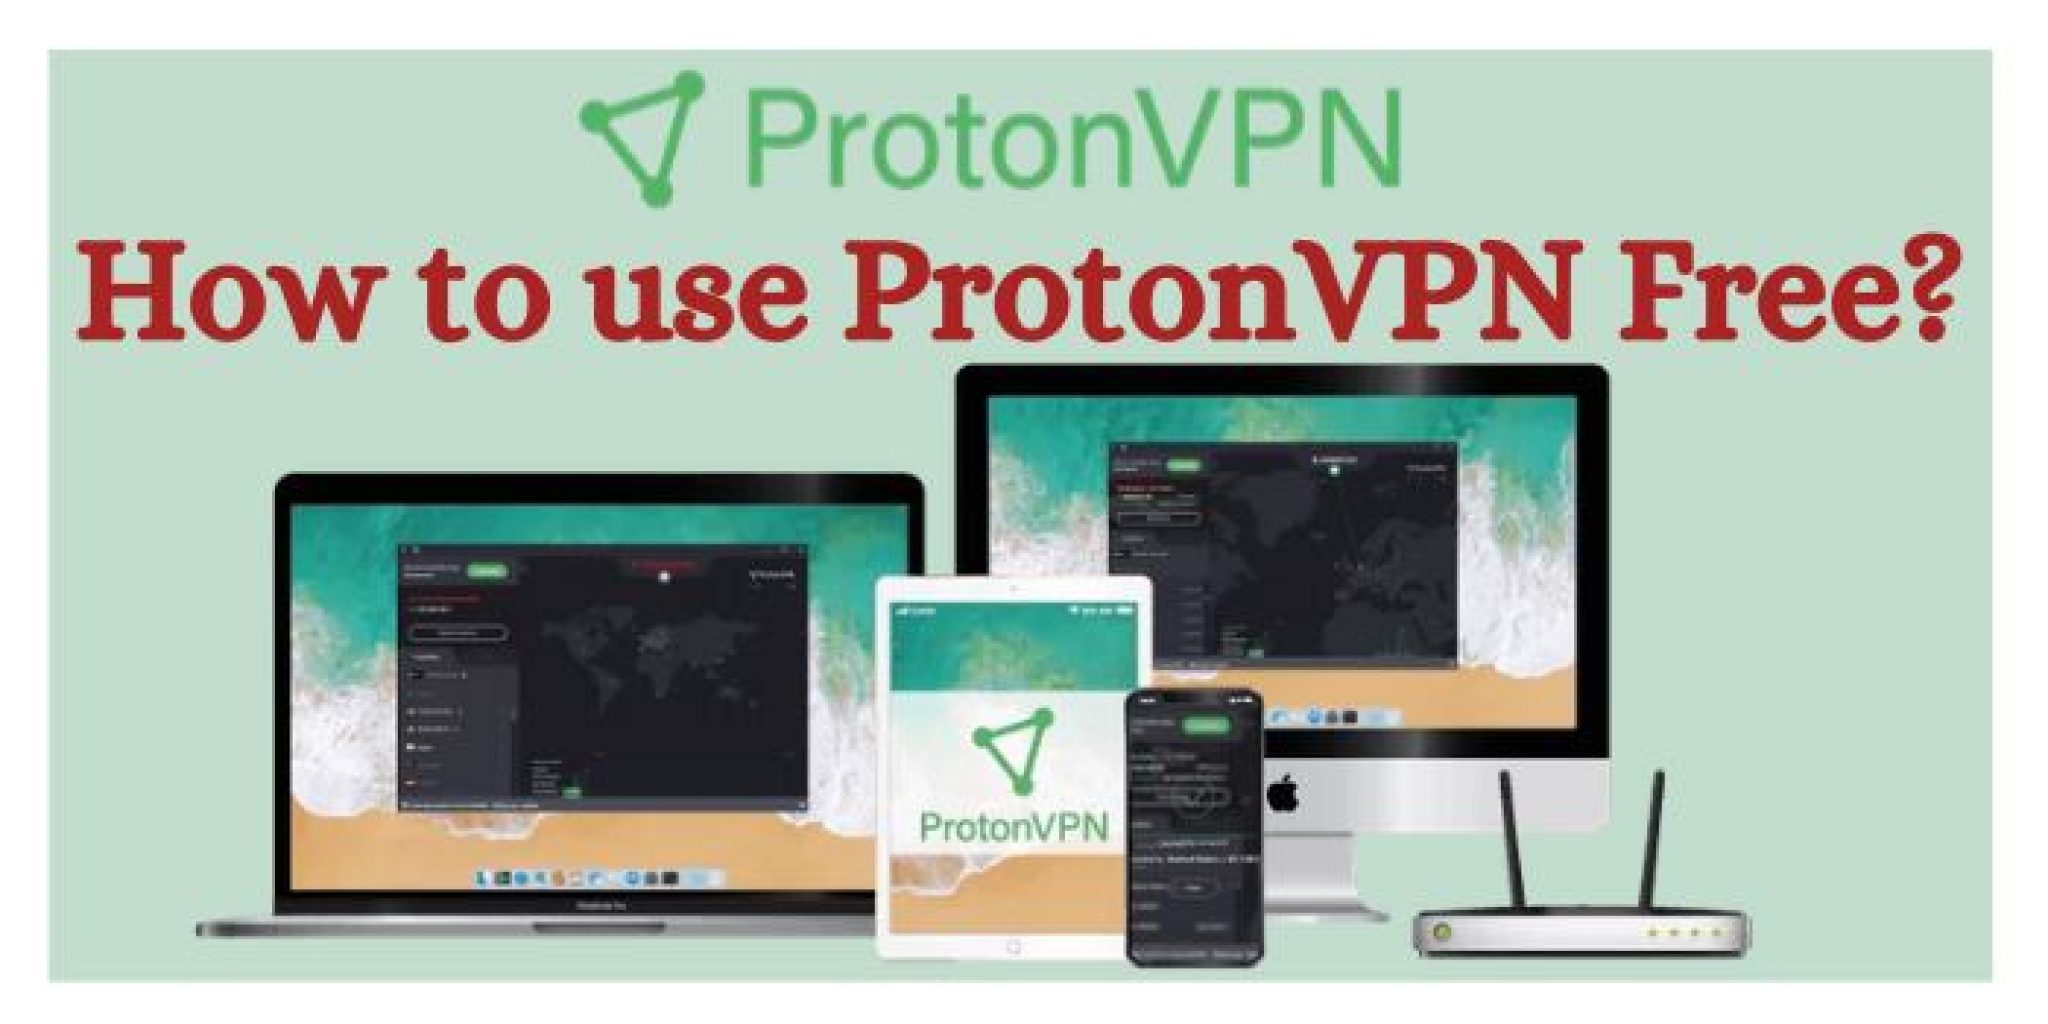 ProtonVPN Free 3.1.0 instal the new for mac